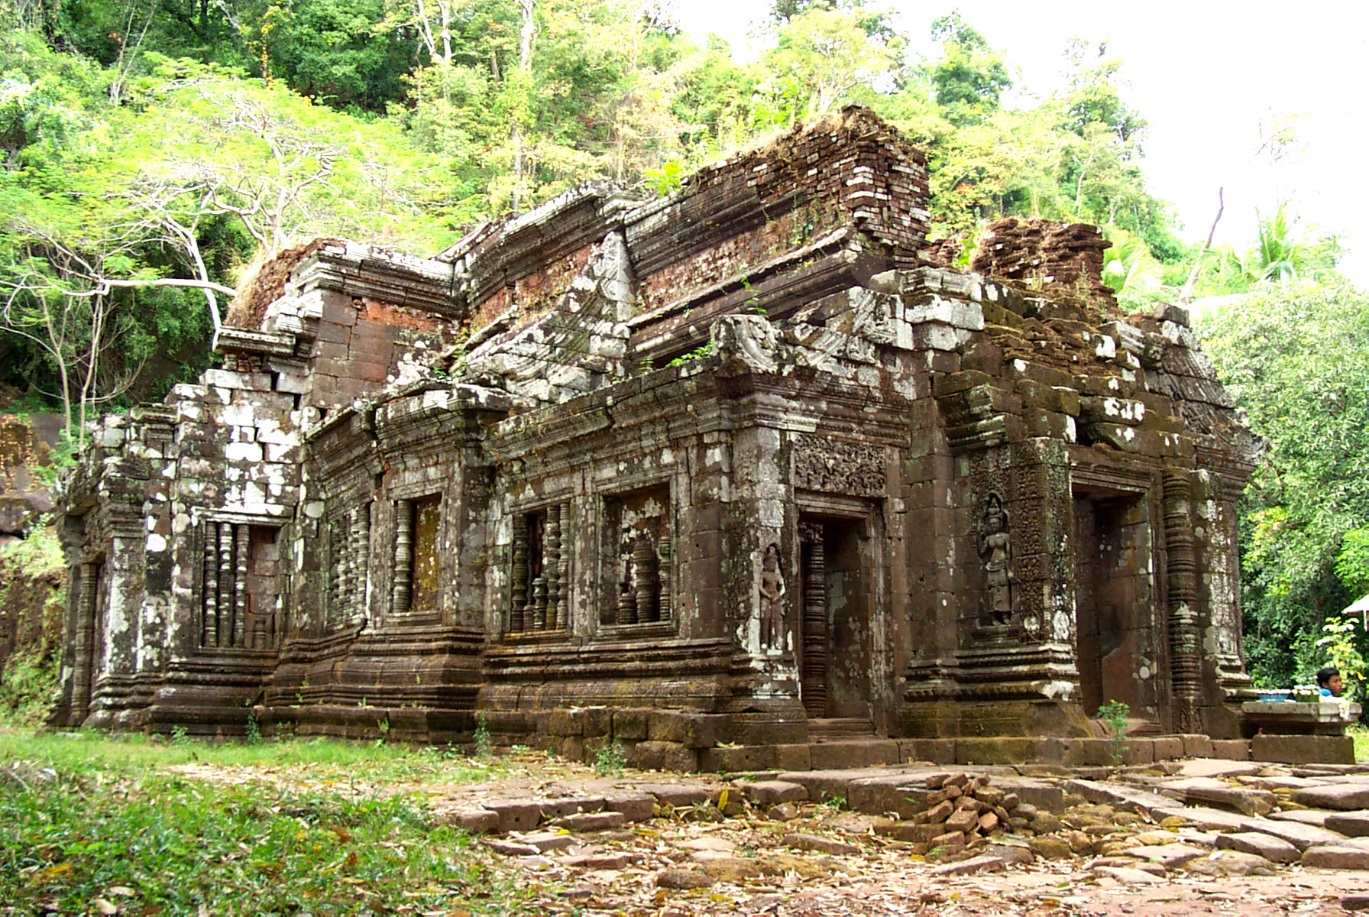 Wat Phou – a Khmer temple